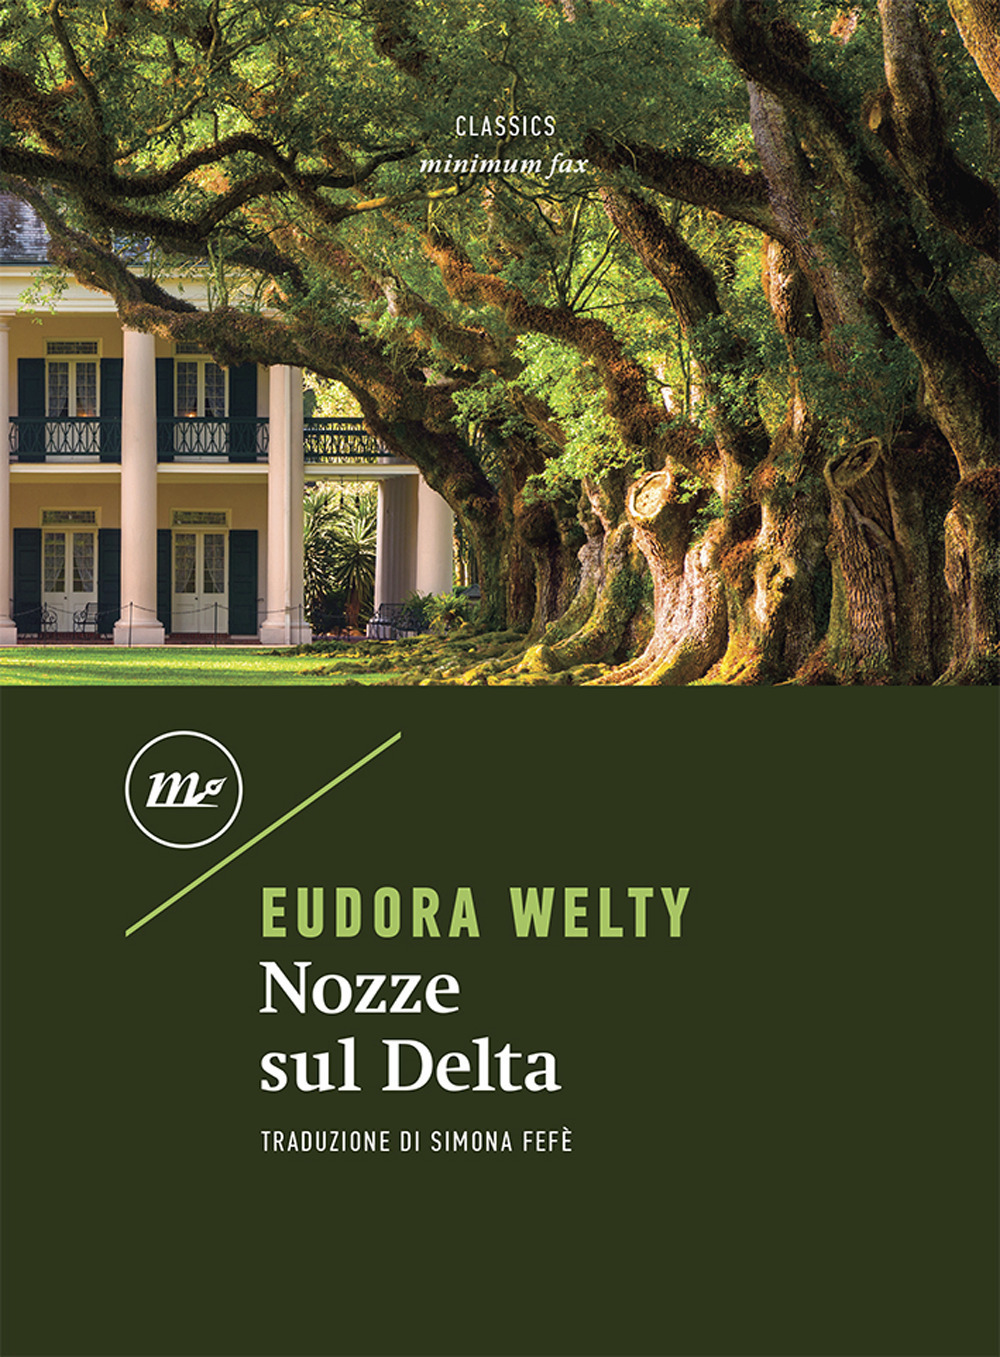 Nozze sul delta - Eudora Welty - Minimum Fax